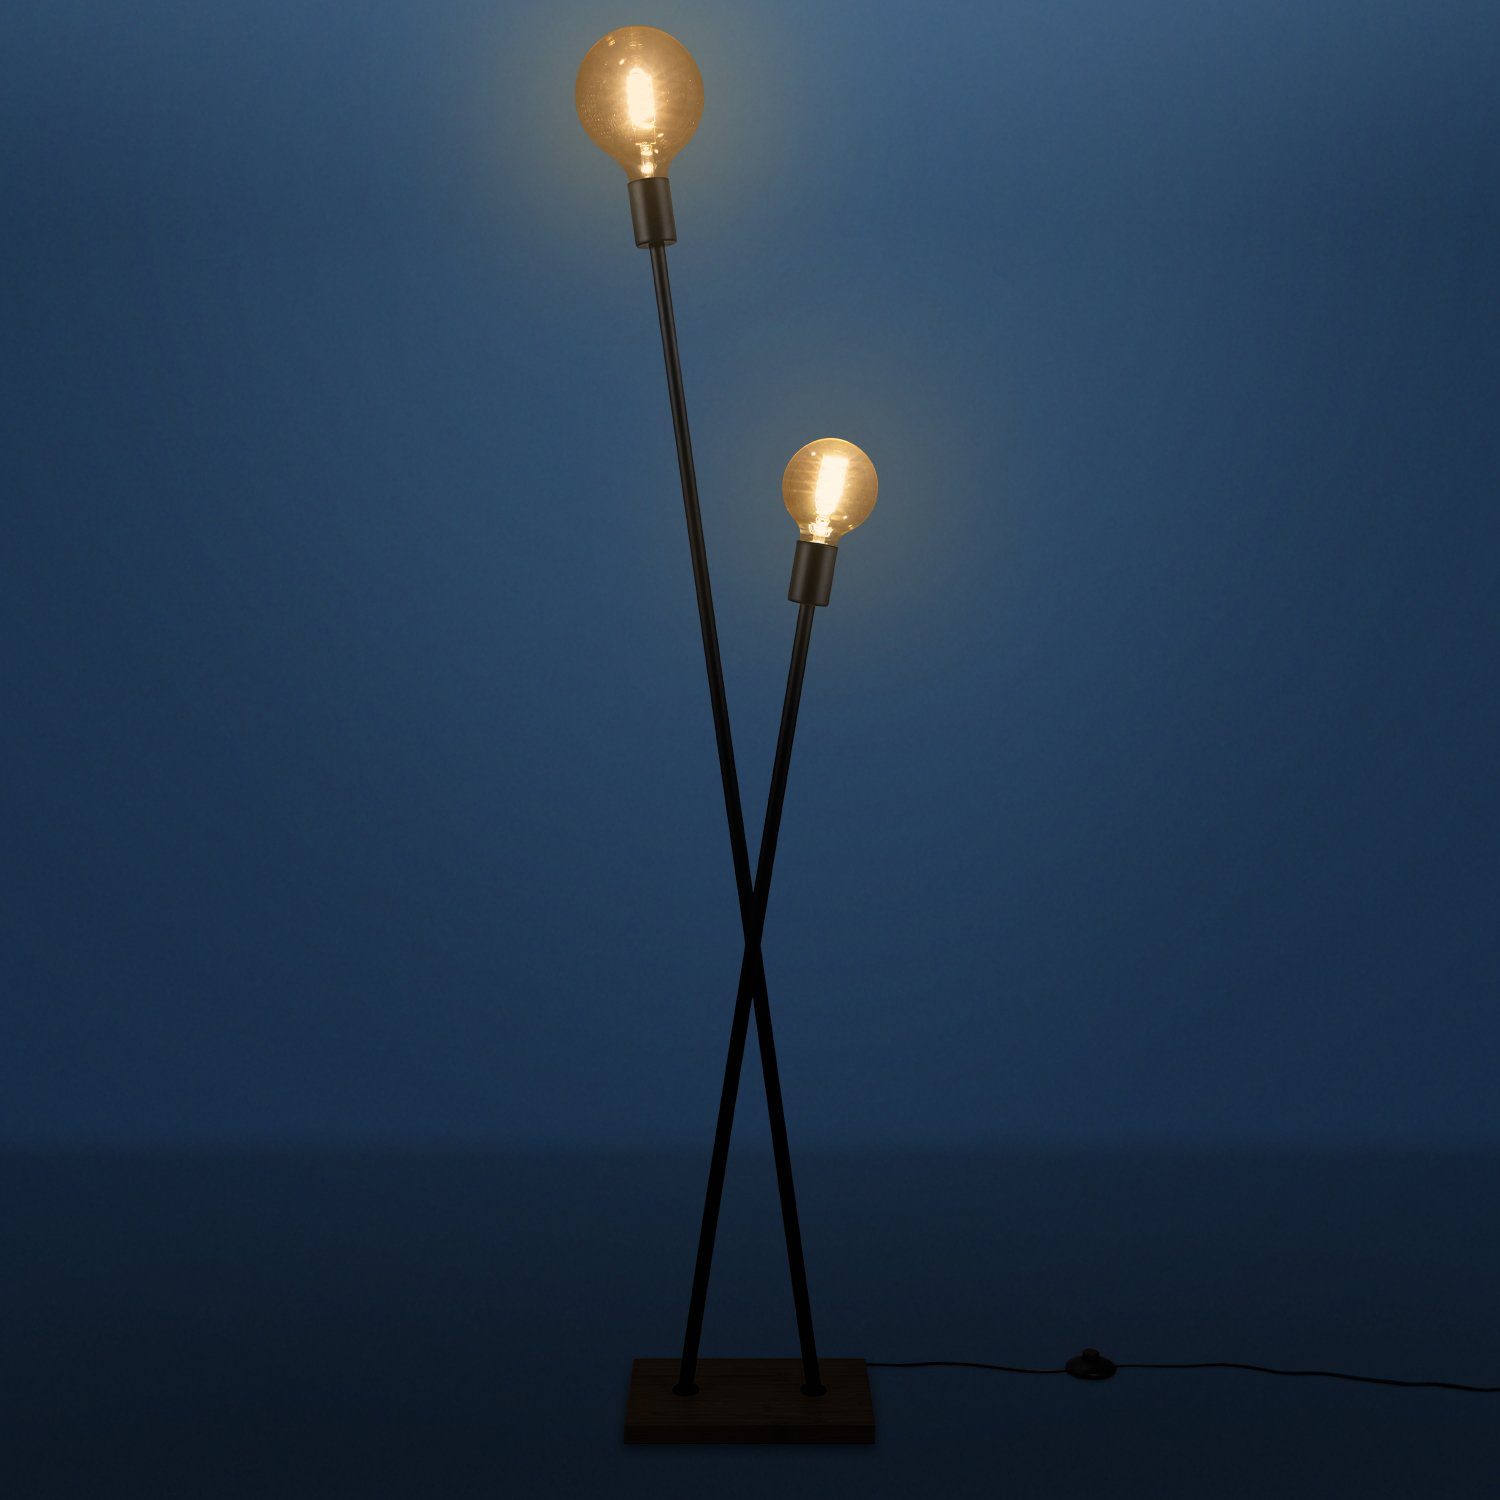 Paco Lampe Leuchtmittel, Stehlampe Stehlampe Home IKS, E27 Industrial Wohnzimmer Design LED Vintage Retro ohne